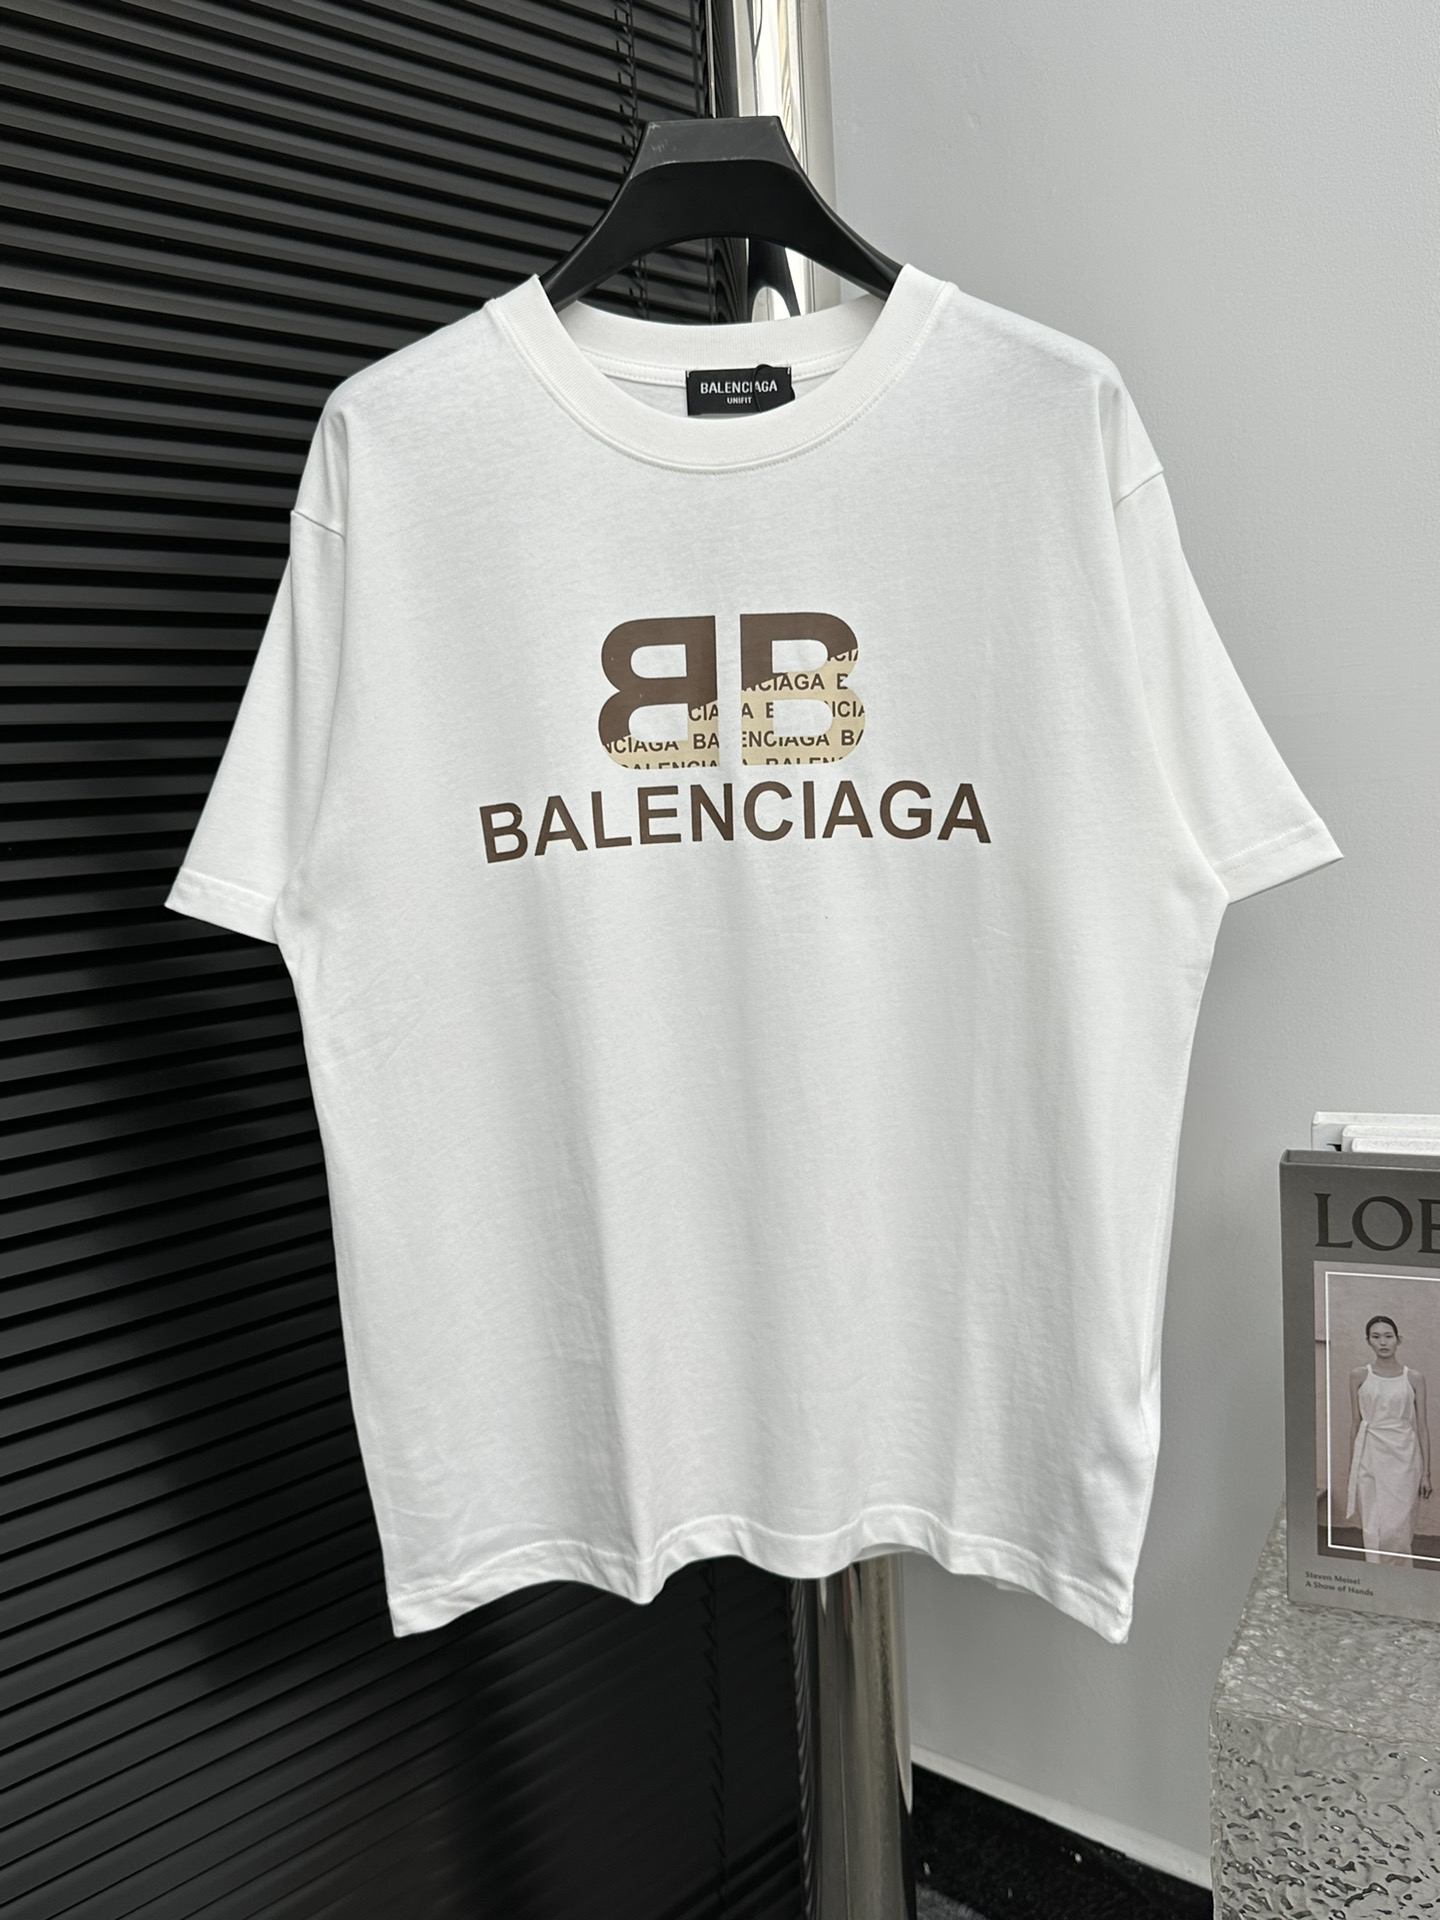 Balenciaga Clothing T-Shirt Black White Cotton Fashion Short Sleeve